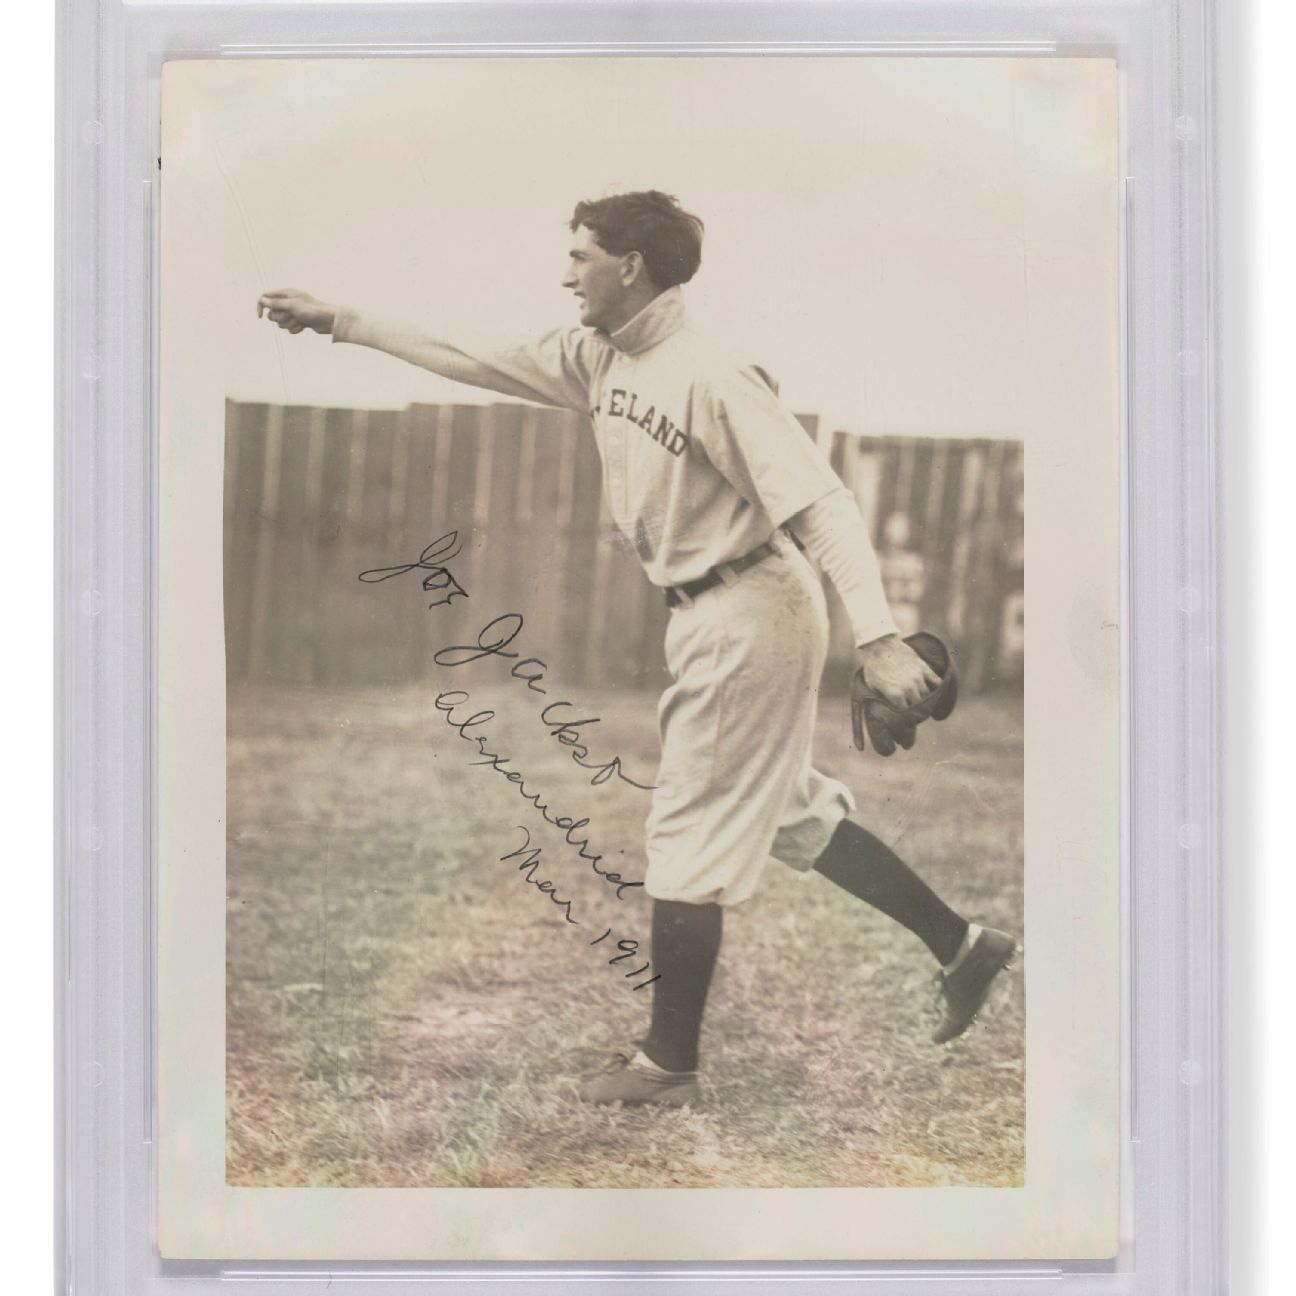 Autographed 'Shoeless' Joe Jackson photograph from 1911 sells for $1.47 million